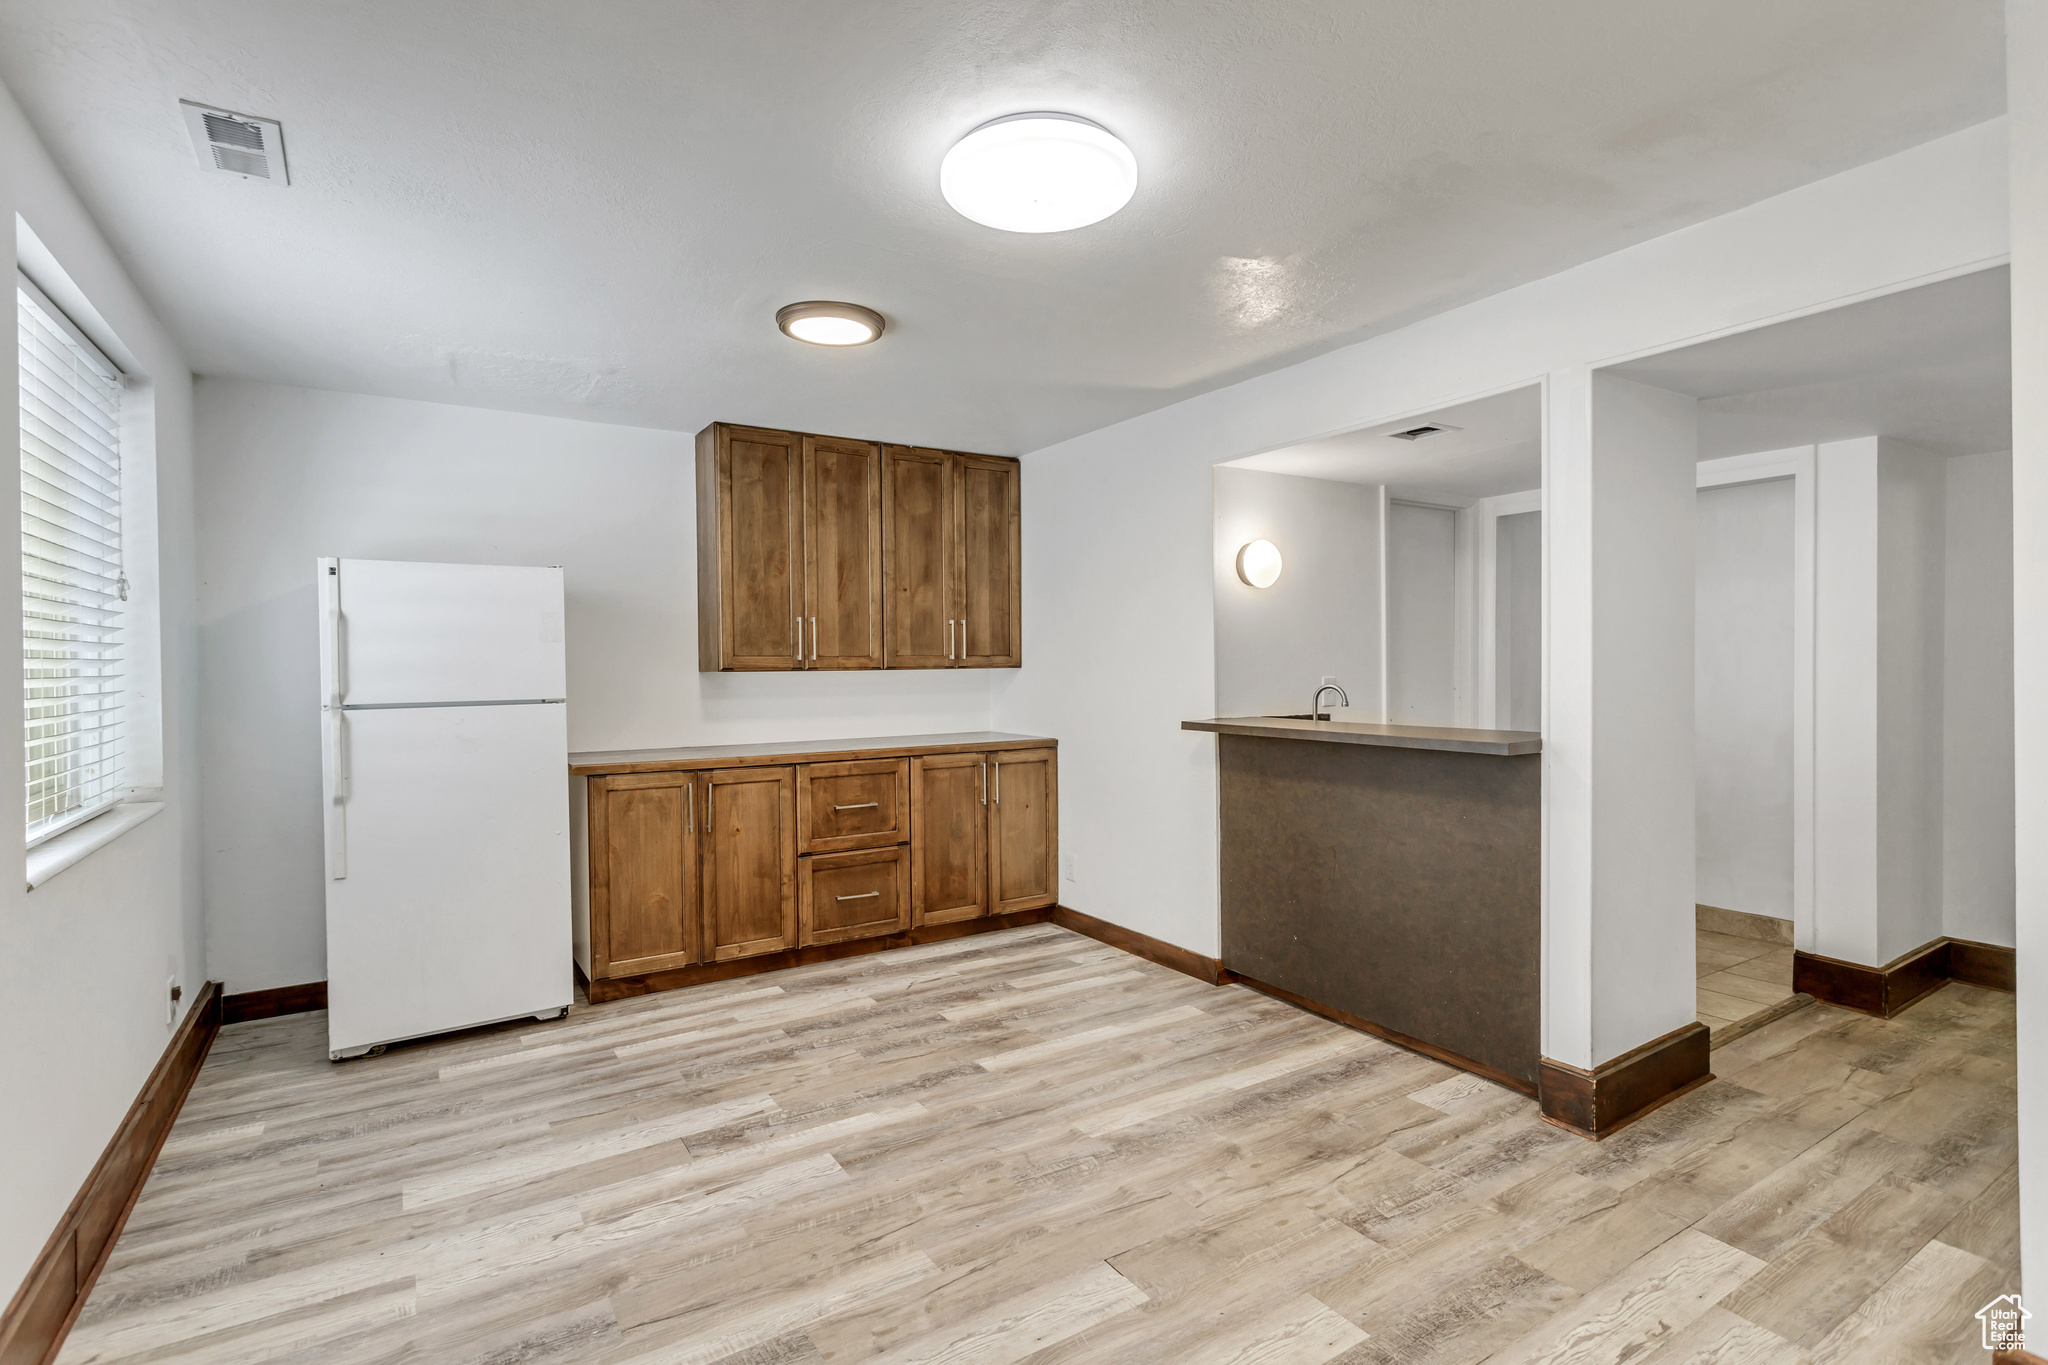 Kitchen with light hardwood / wood-style flooring, white fridge, and sink